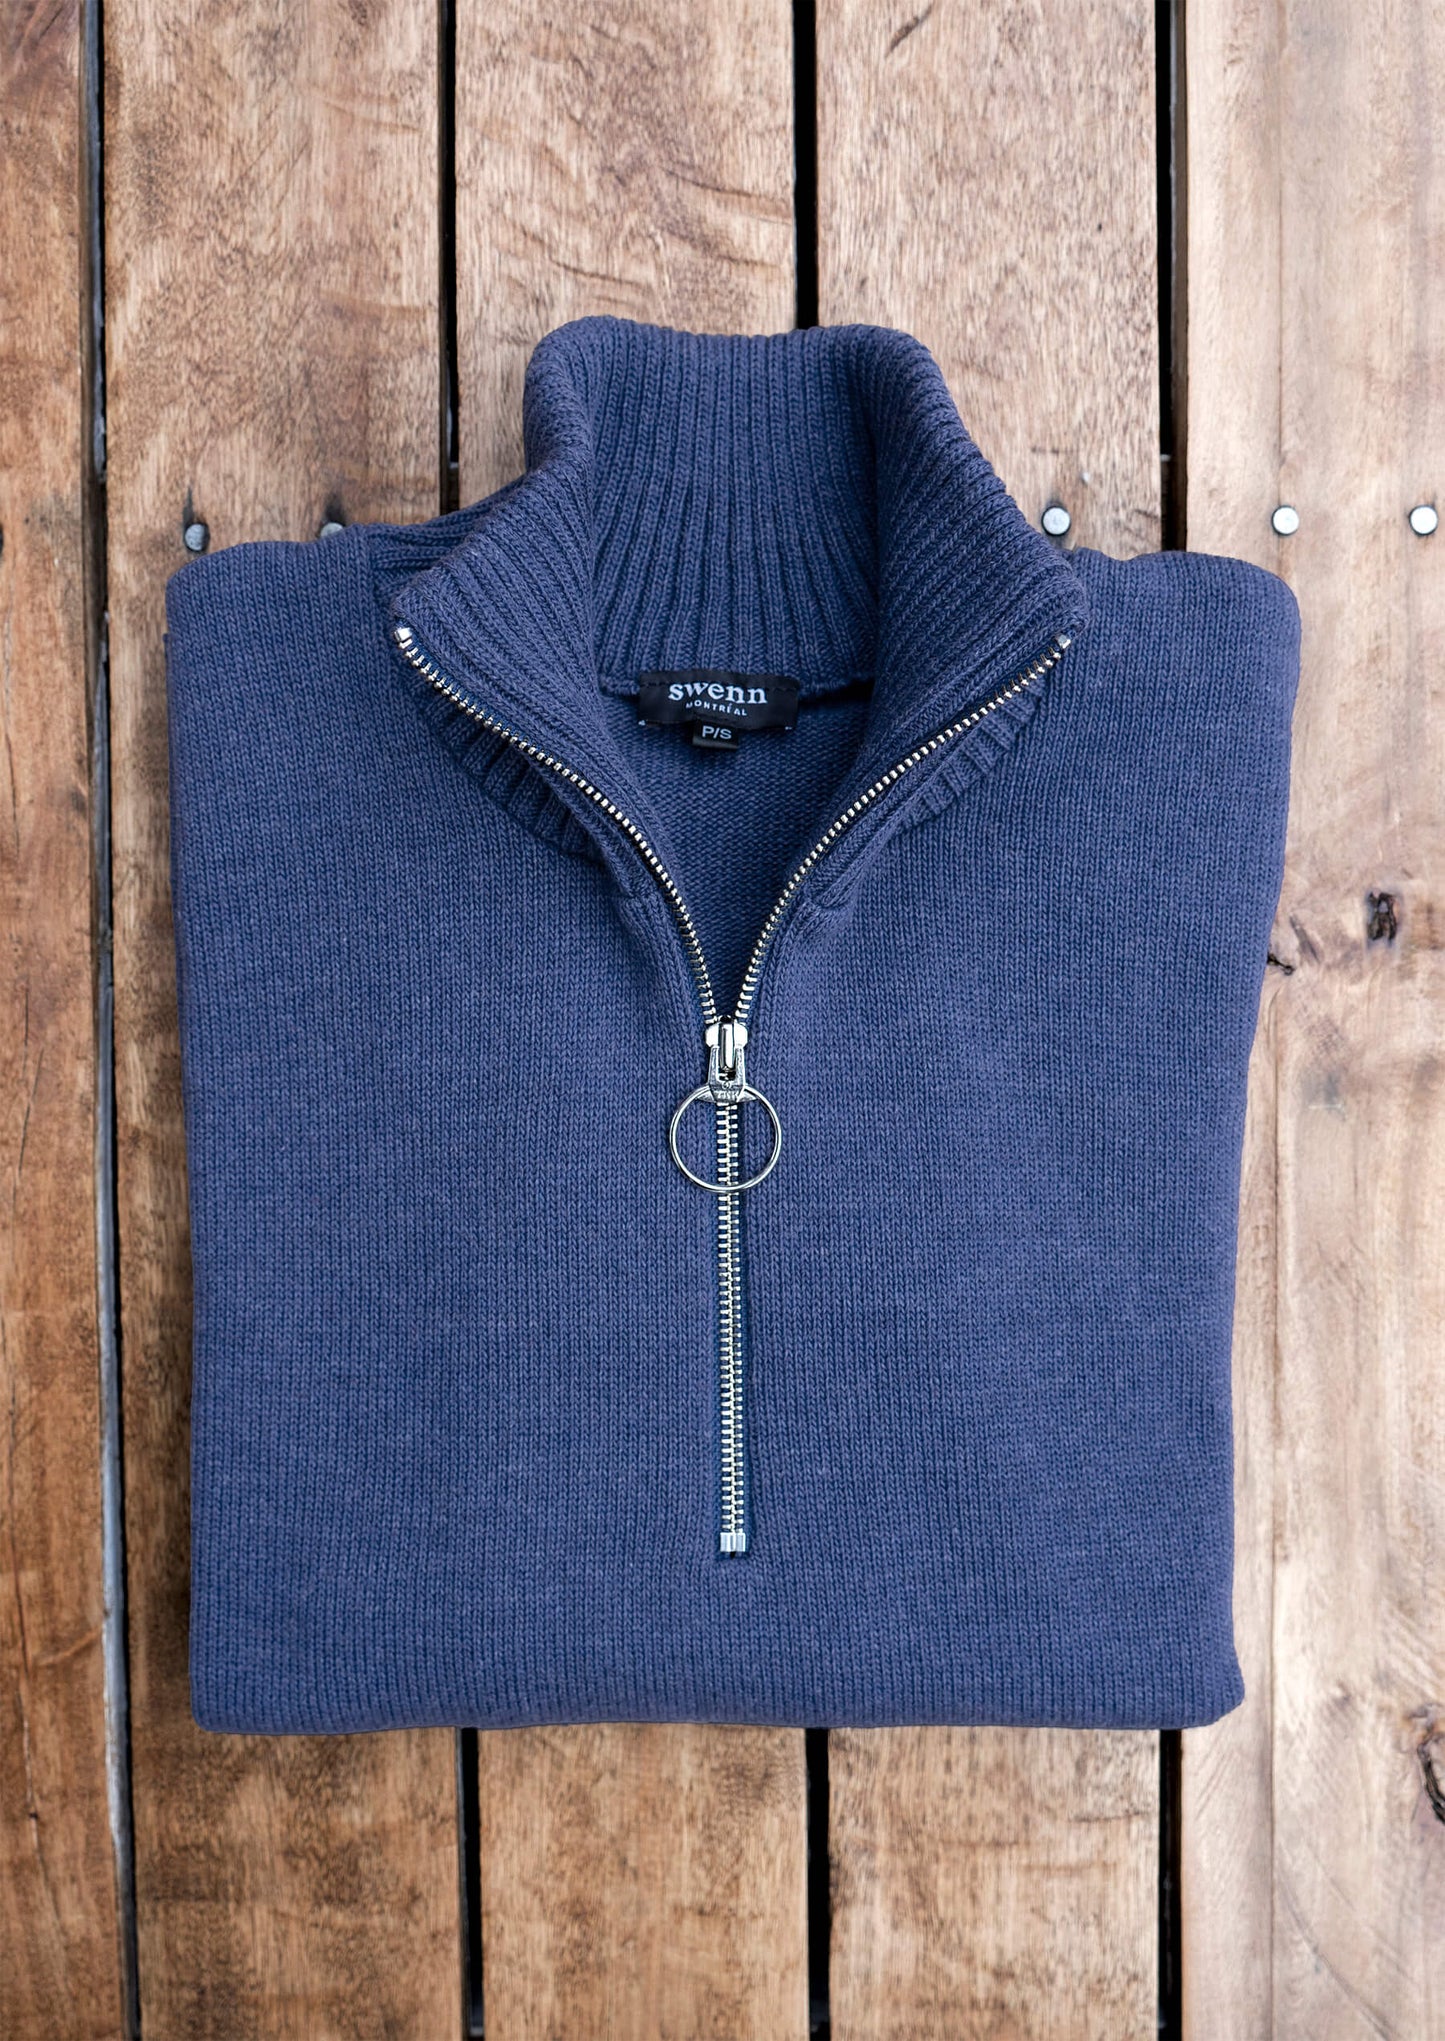 Keraudy - zip sweater - denim blue